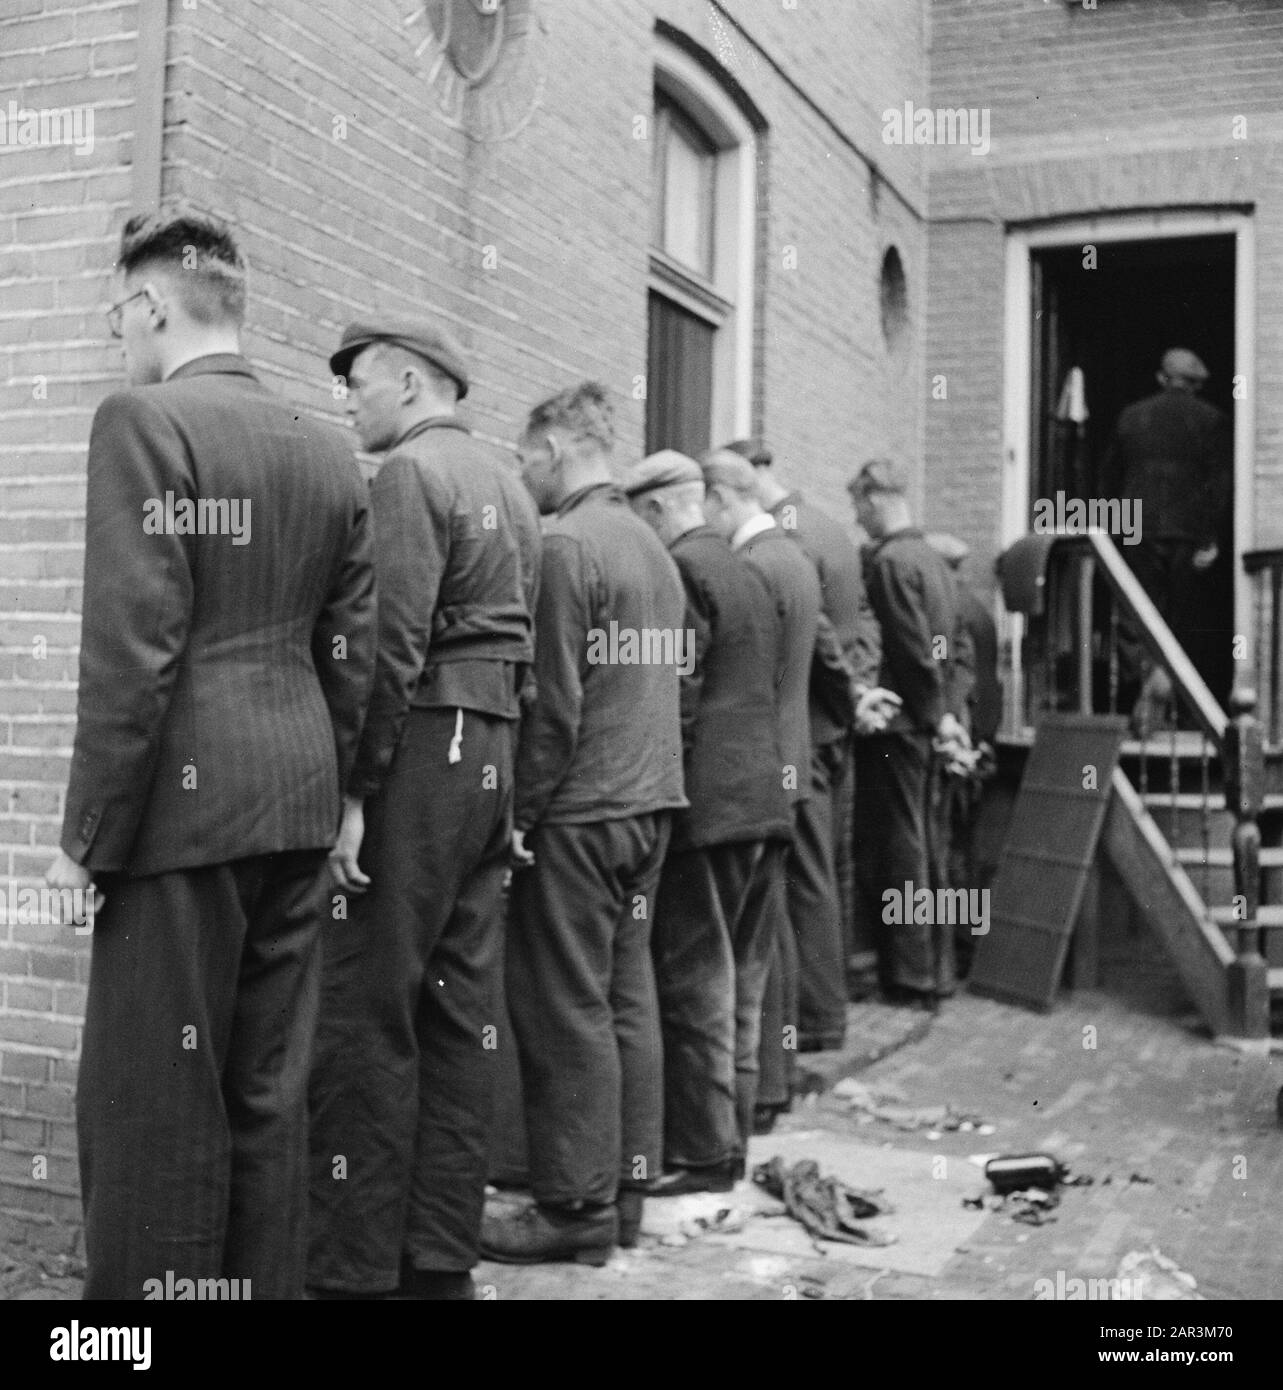 Front North-East Netherlands: tour Prince Bernhard  Collaborators taken into custody. Date: April 1945 Keywords: collaborators, World War II Stock Photo